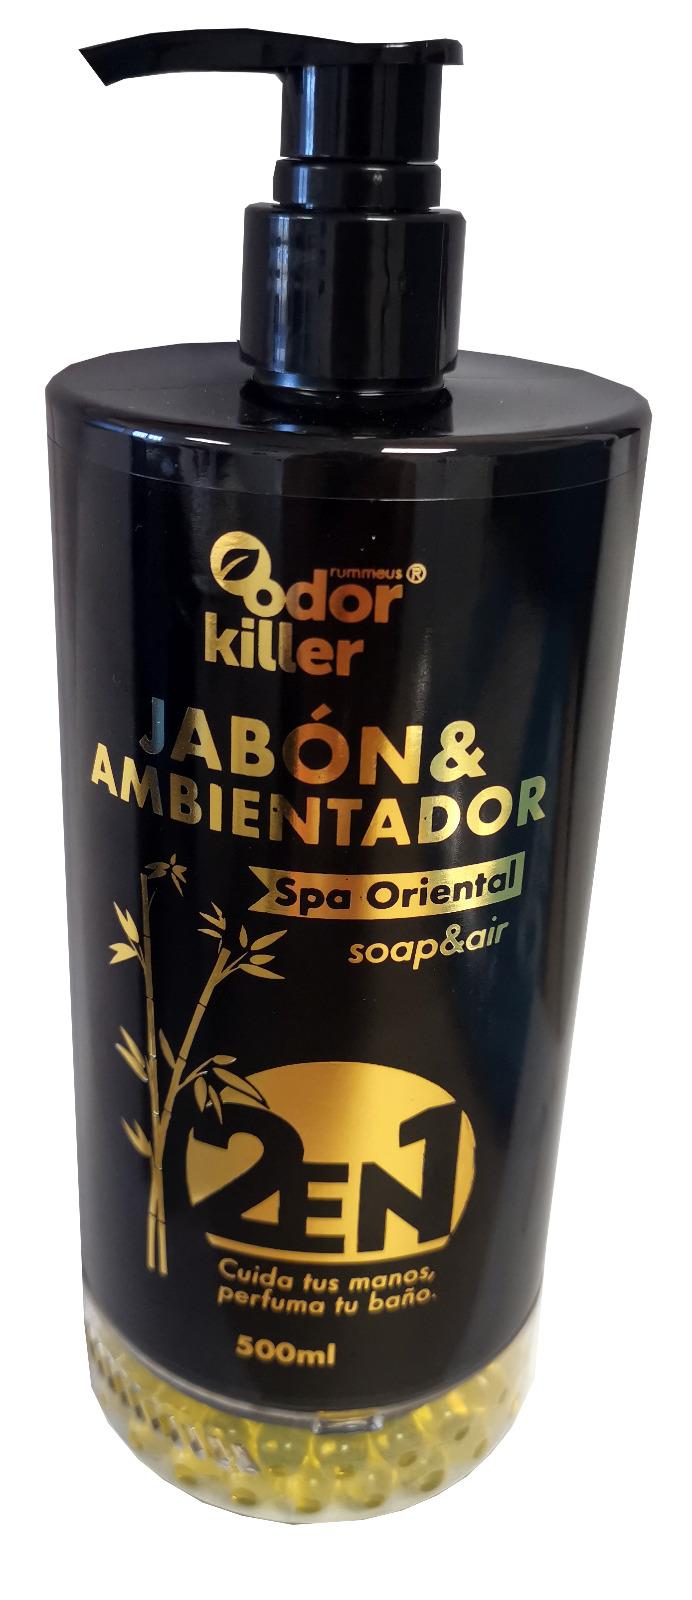 Odor Killer Jabón & Ambientador 500ml 